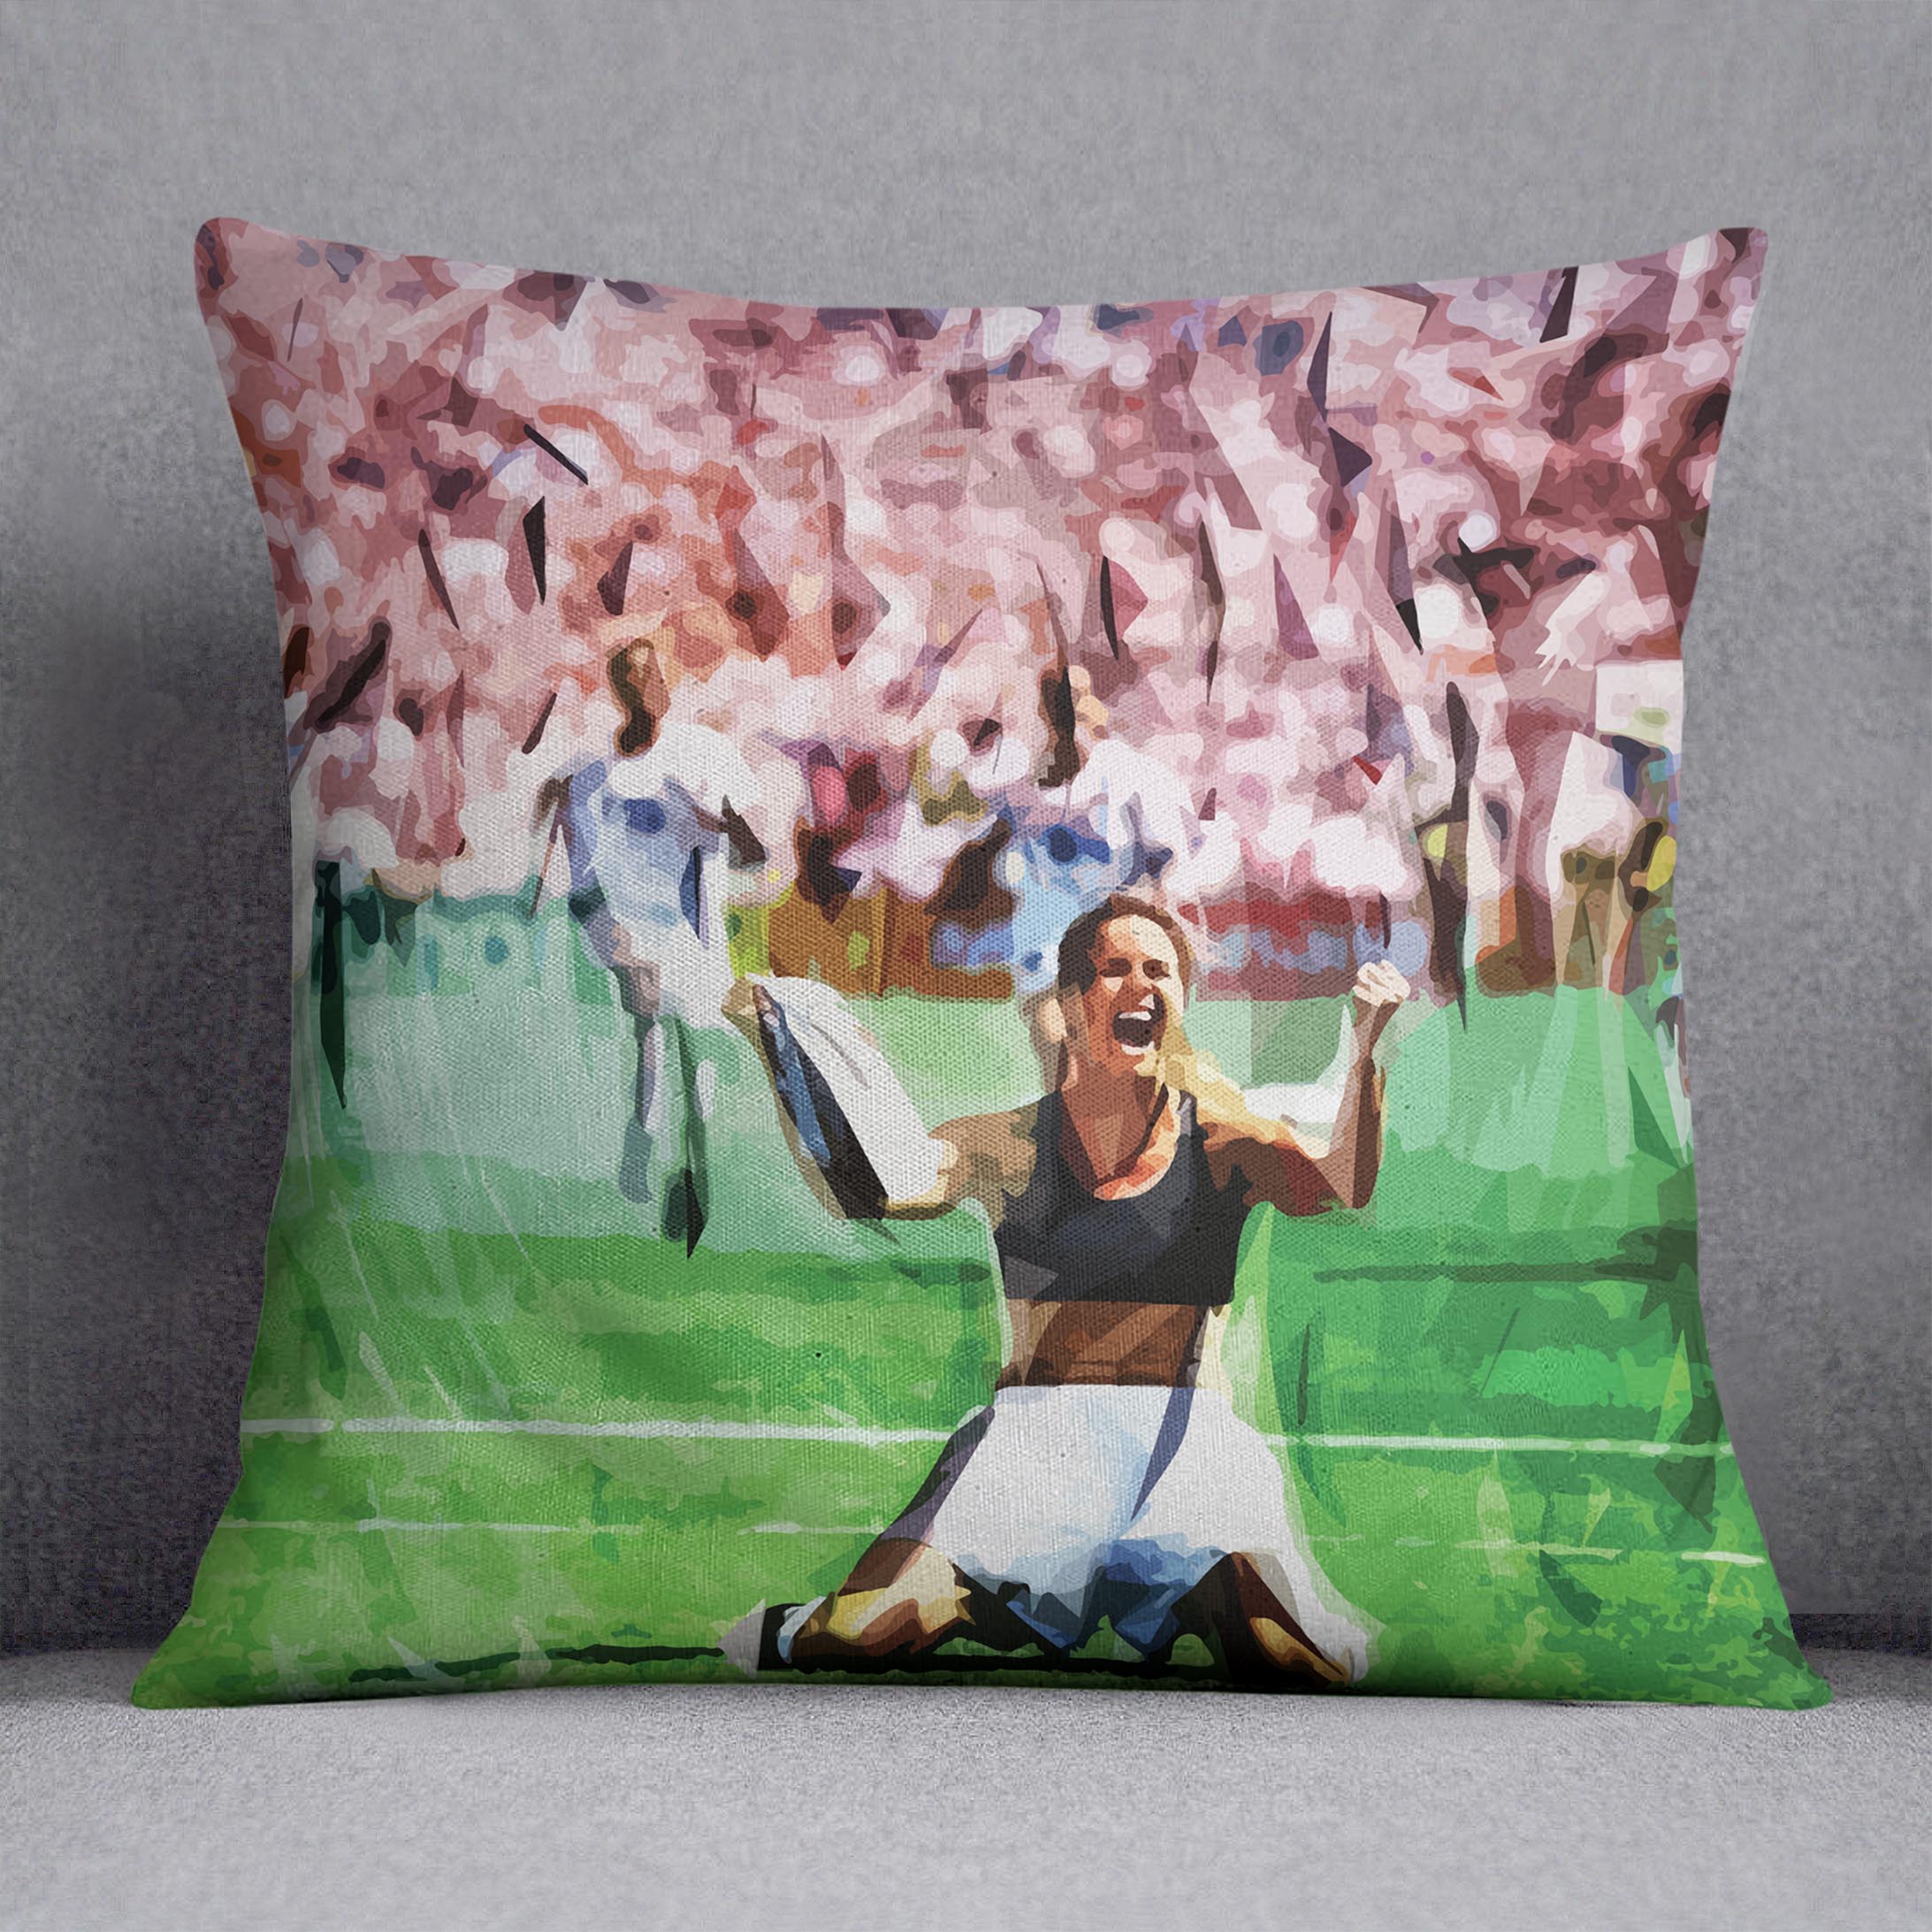 Brandi Chastain Celebrates USA Soccer 1999 Cushion